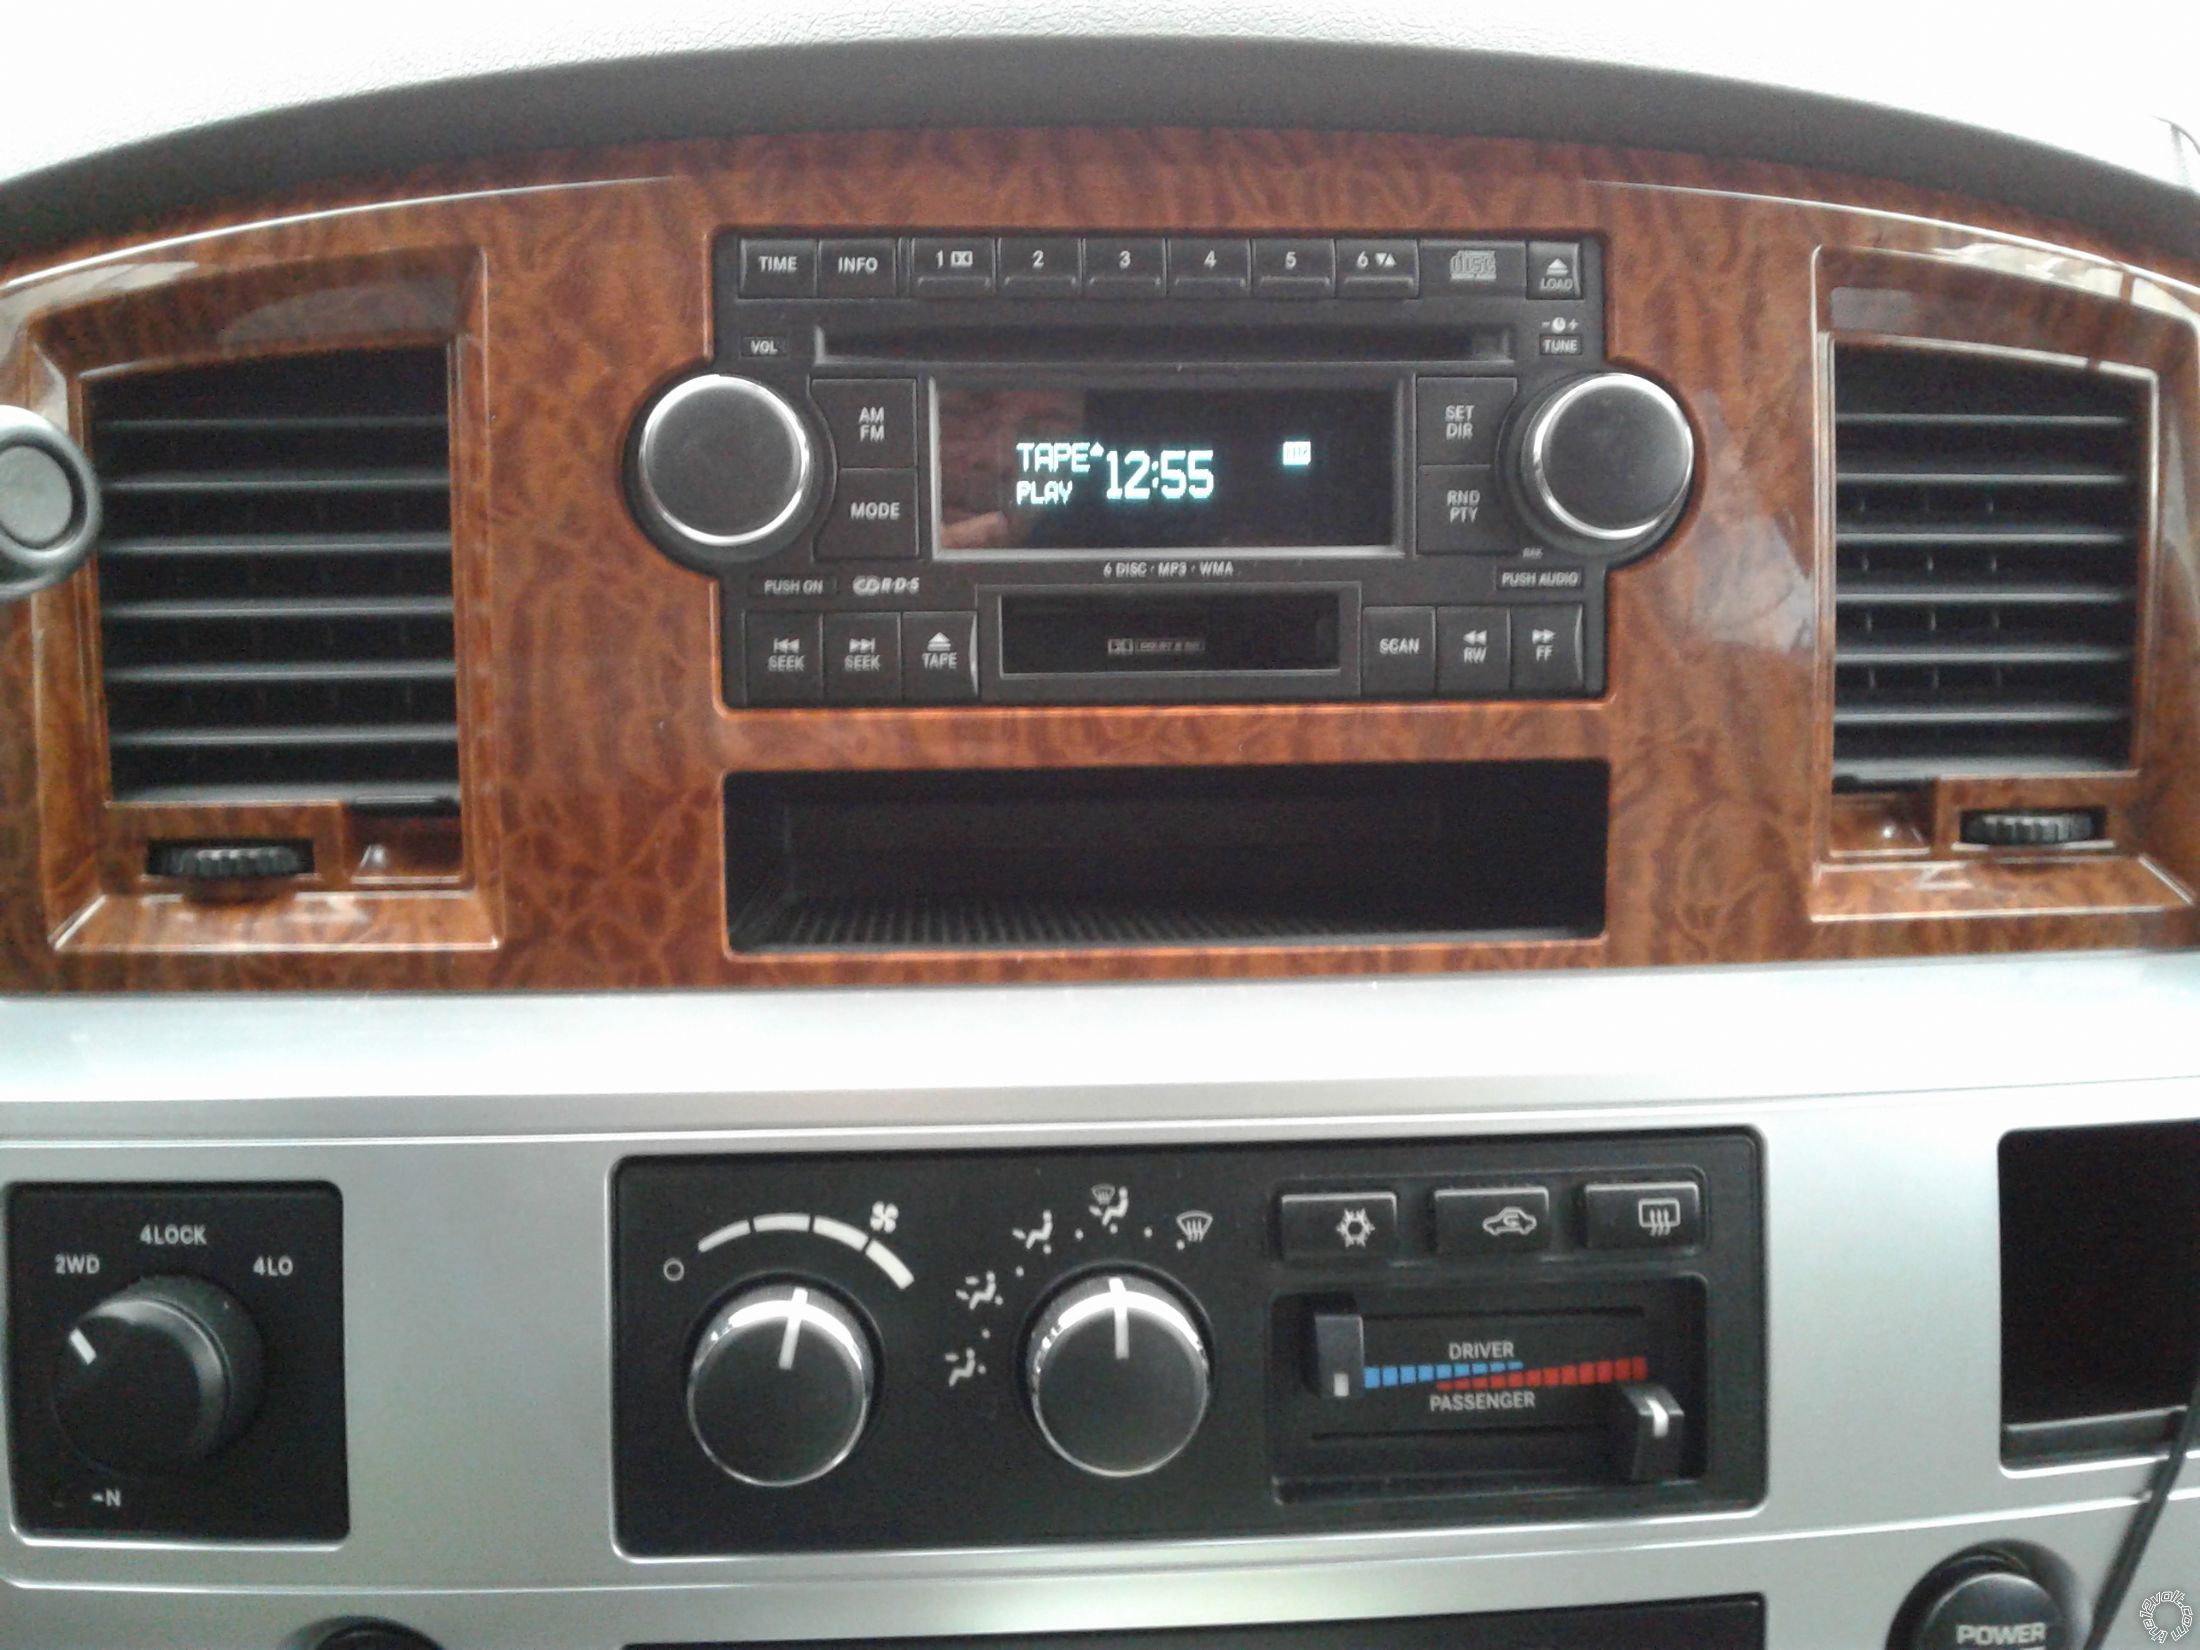 2006 Dodge Ram RAQ for RAK Radio Swap - Last Post -- posted image.